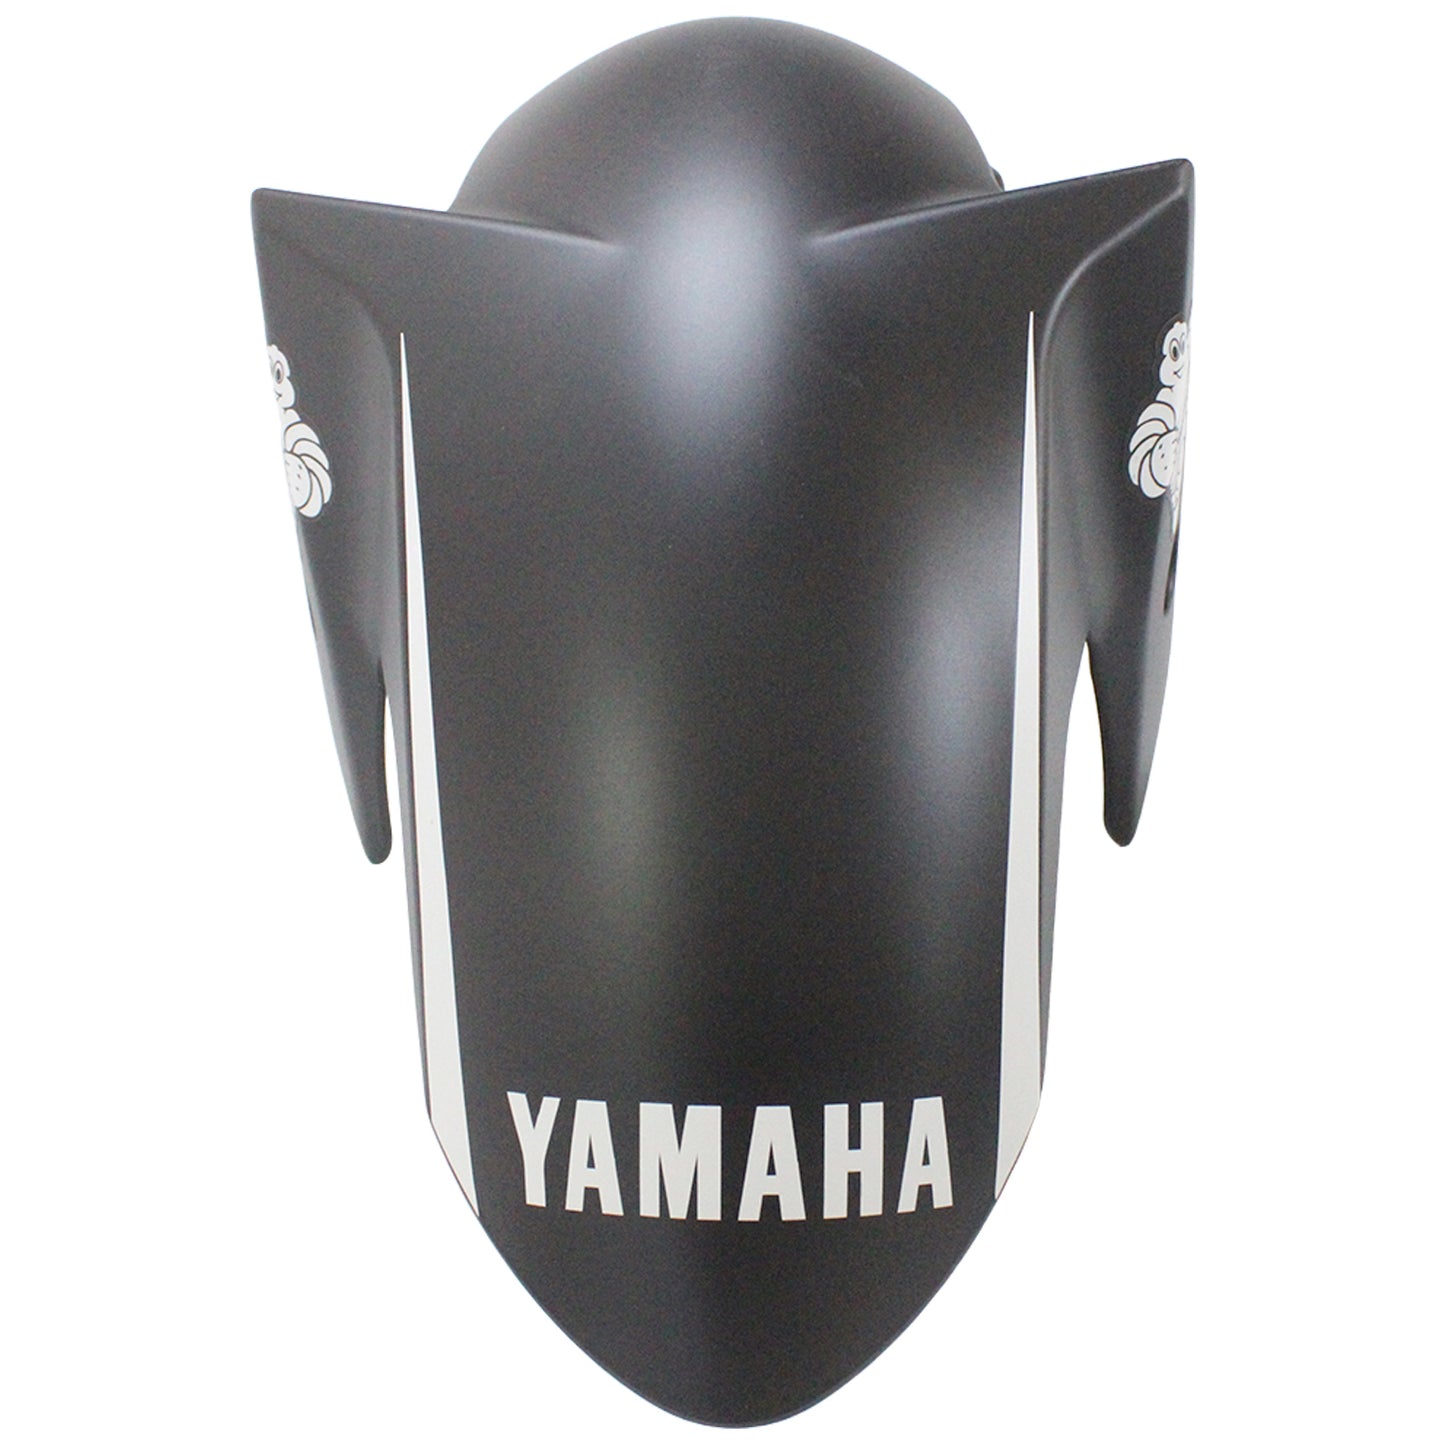 Amotopart-Verkaufskit Yamaha 2014-2018 YZF R3 & 2015-2017 YZF R25 Red Bull Logo Abzugskit